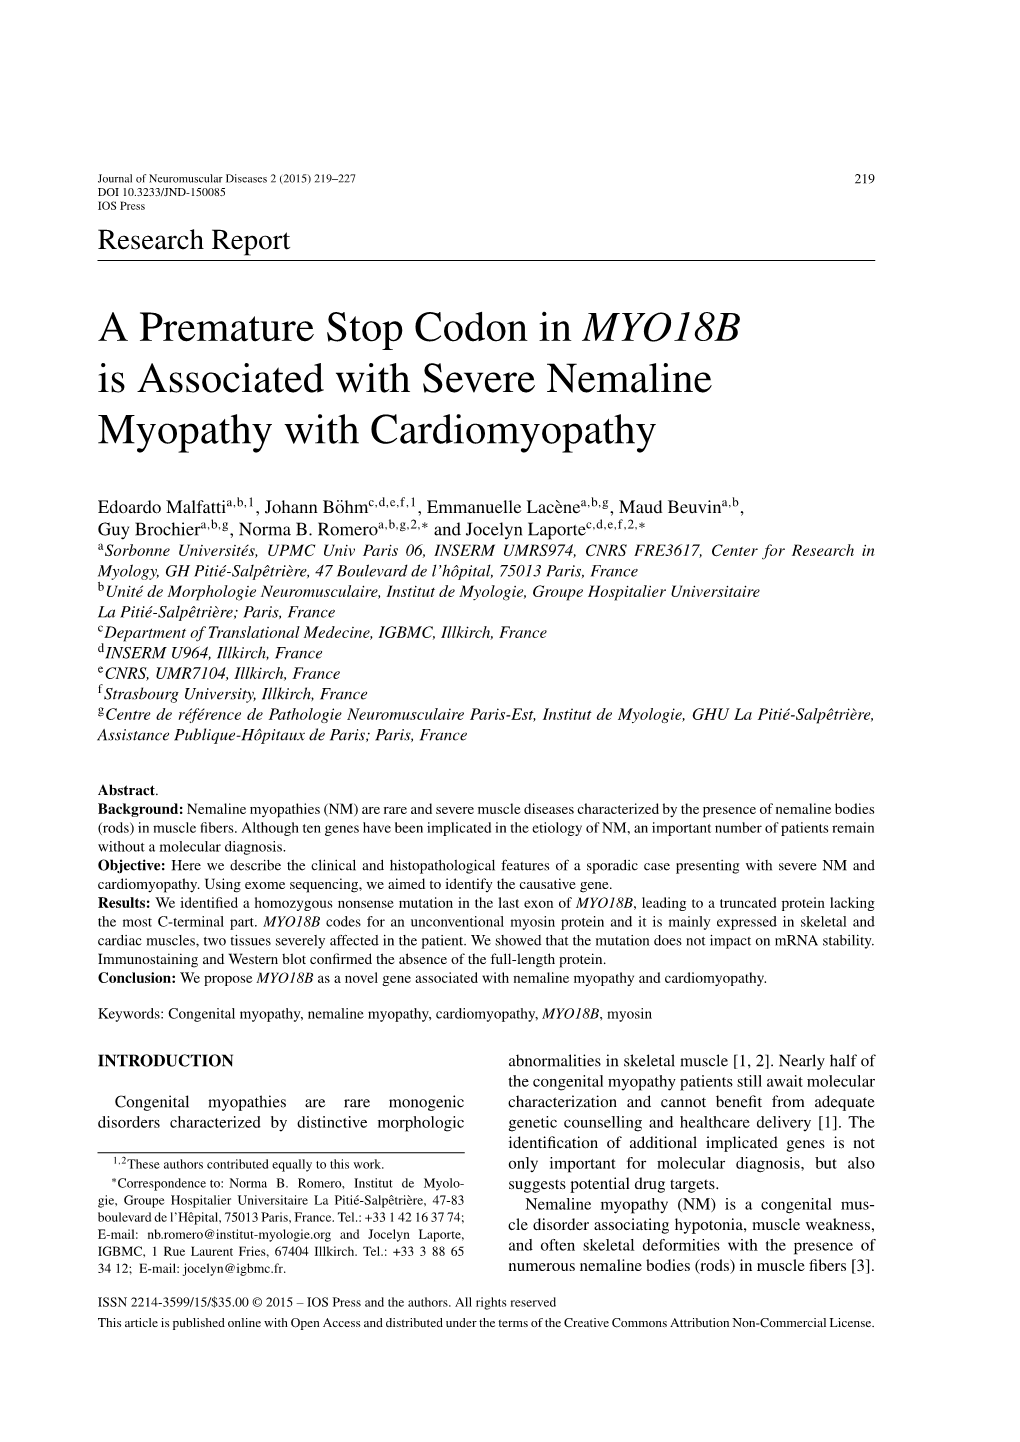 A Premature Stop Codon in MYO18B Is Associated with Severe Nemaline Myopathy with Cardiomyopathy